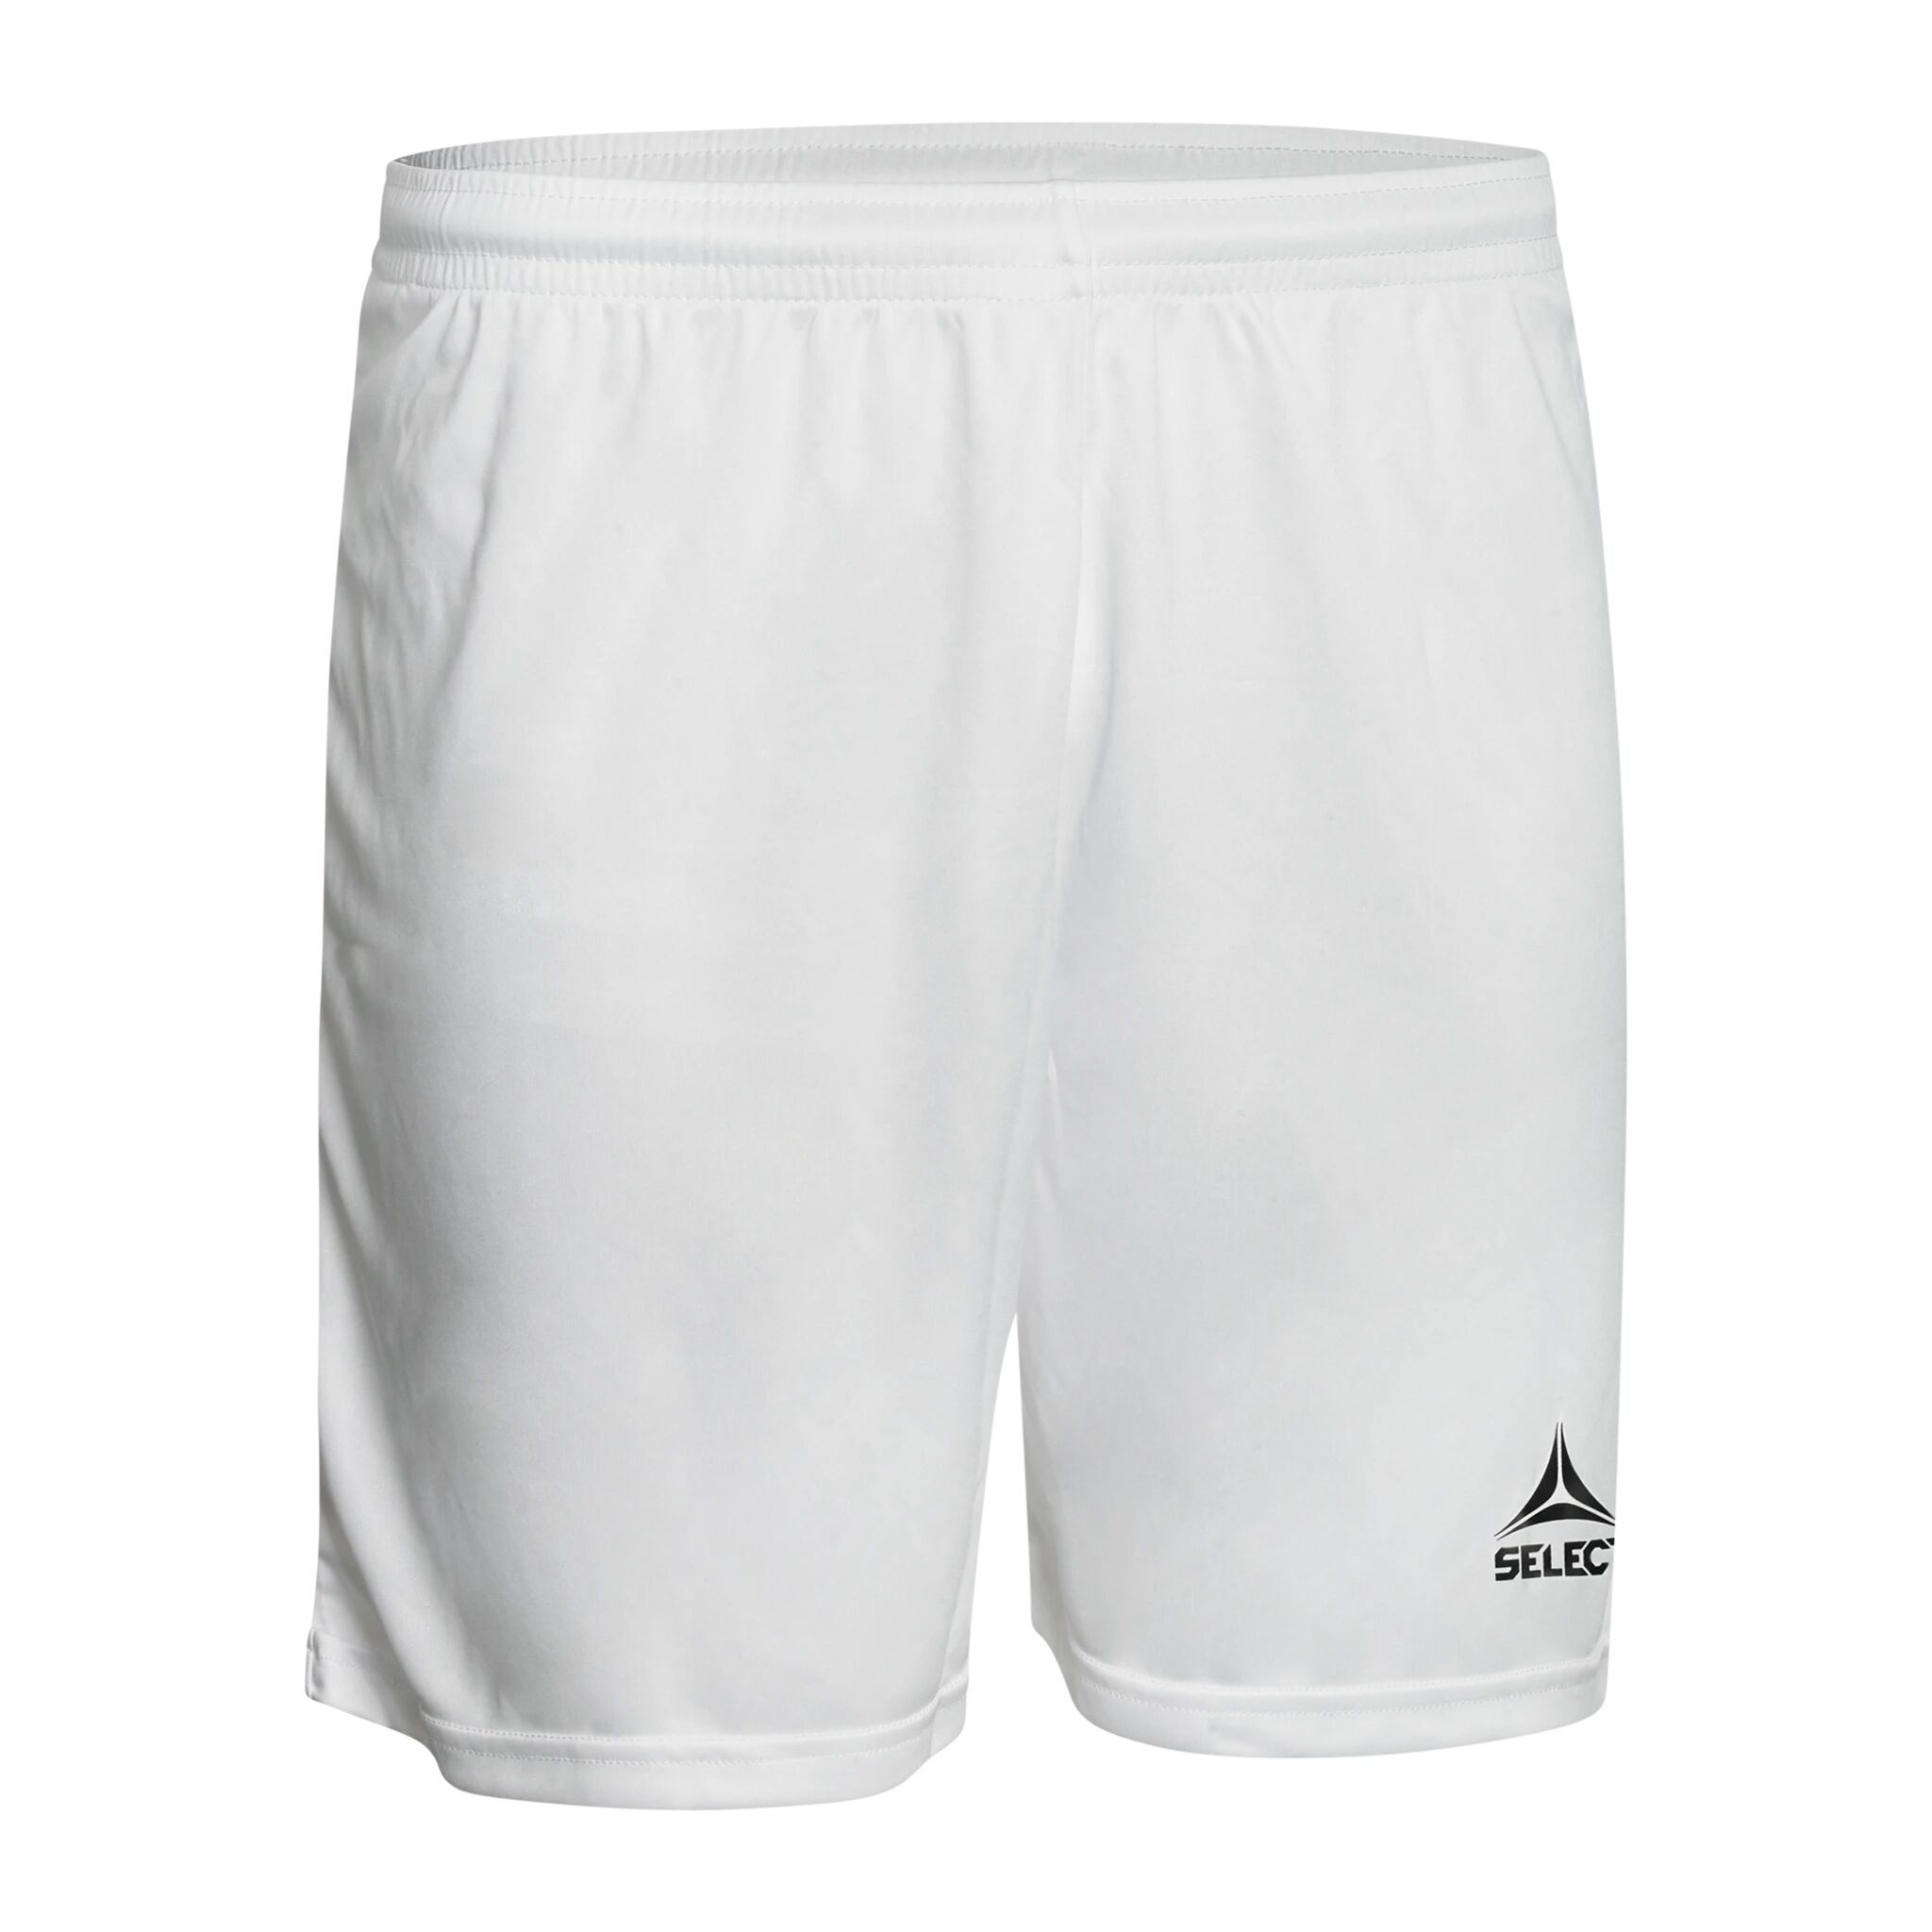 Select Player shorts Pisa, shorts senior L White